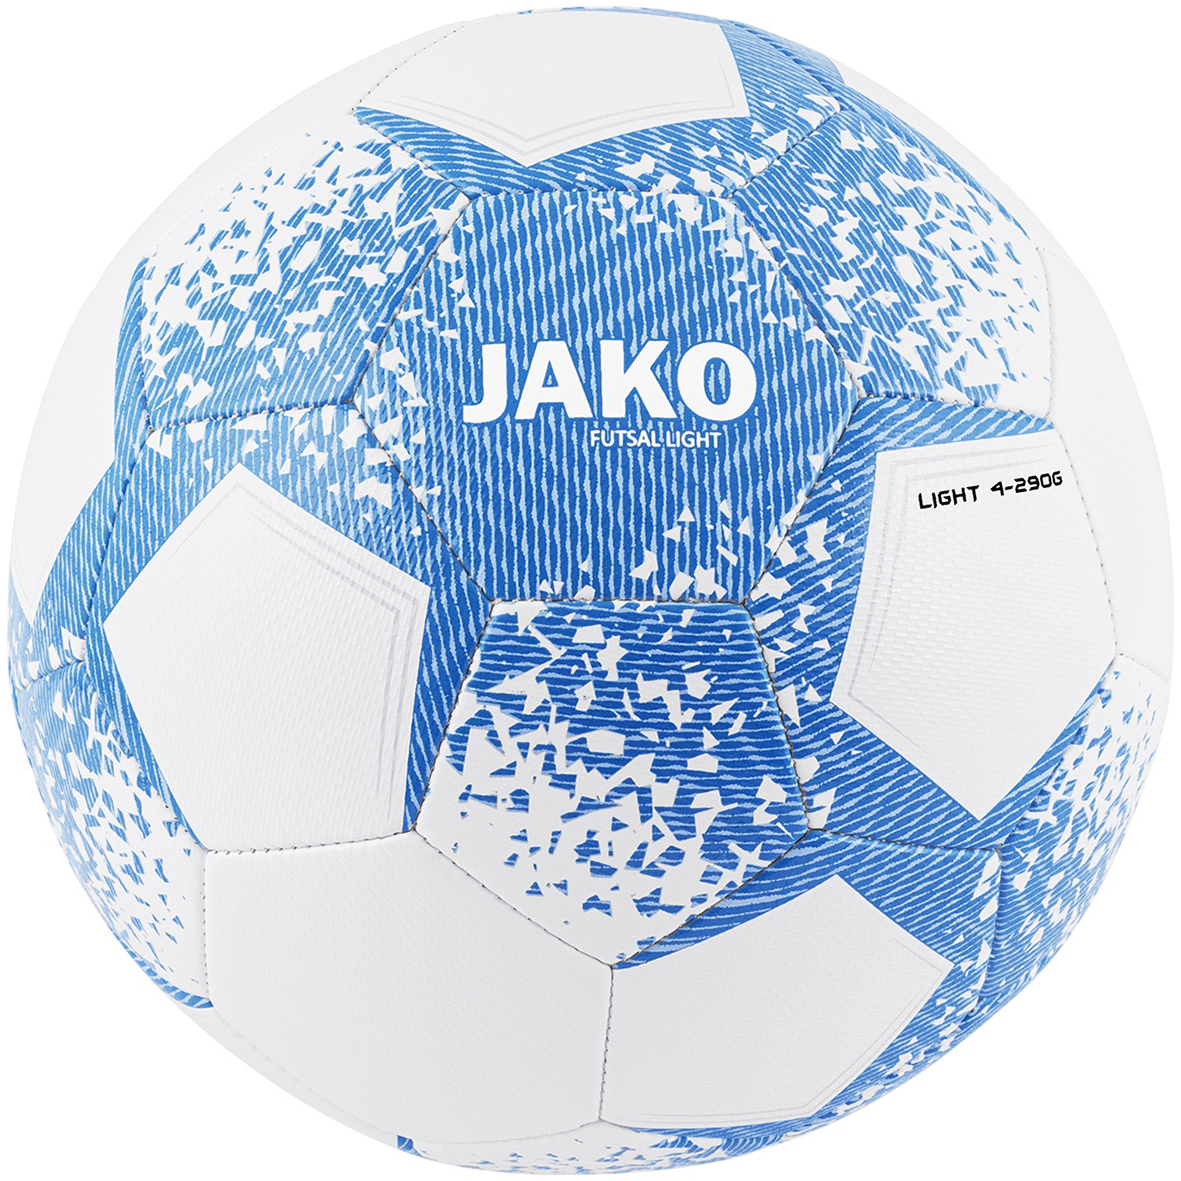 JAKO BALL FUTSAL LIGHT, WHITE-BLUE JAKO-LIGHT BLUE.